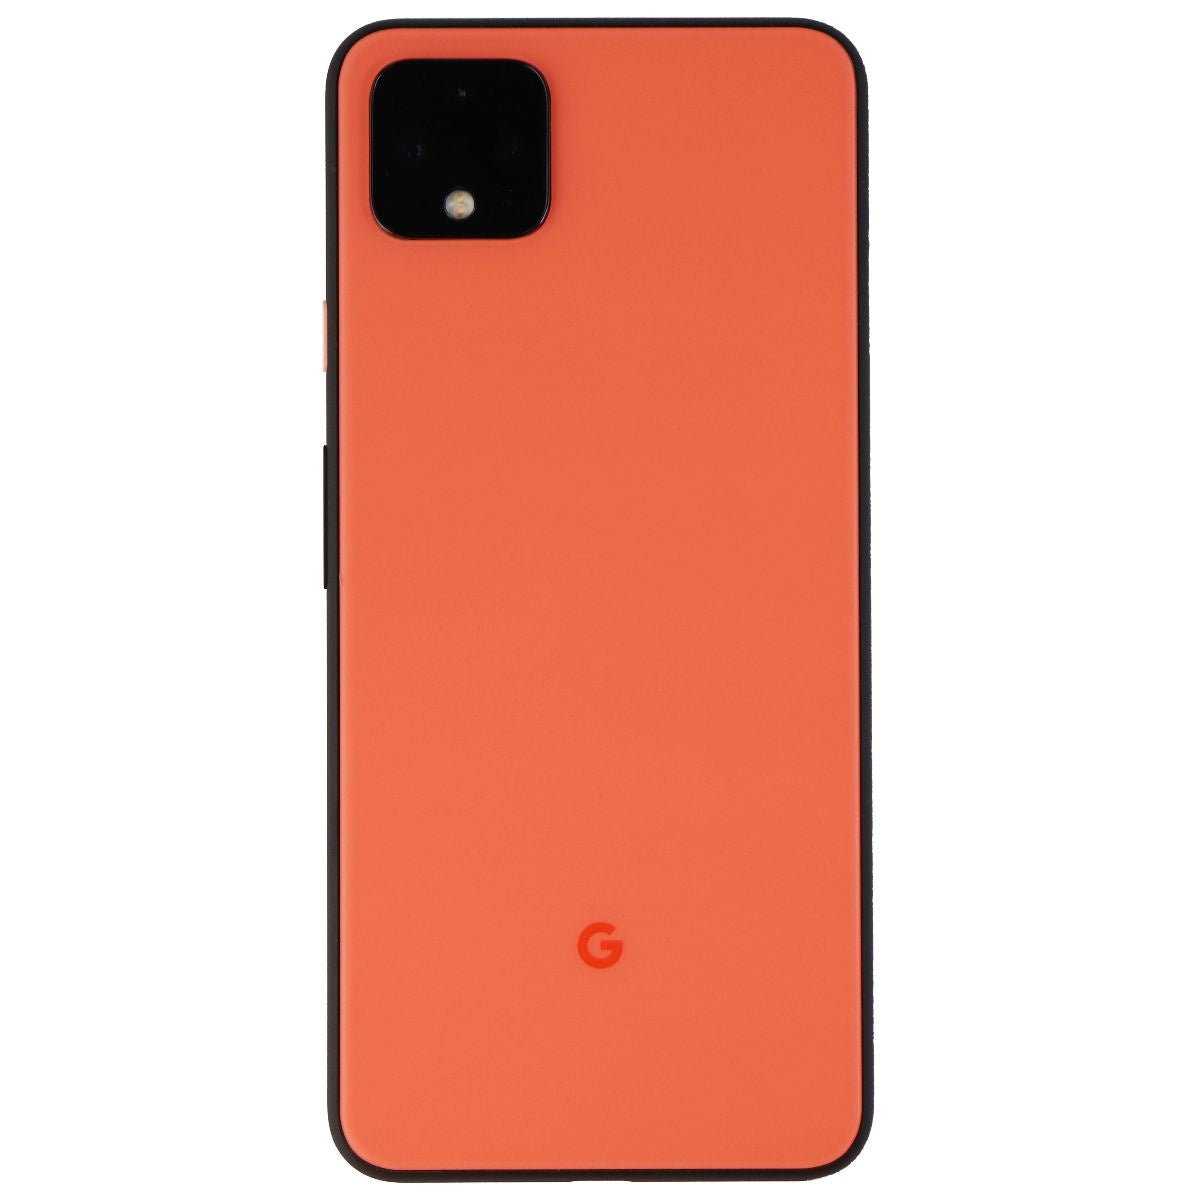 Google Pixel 4 (5.7-inch) Smartphone (G020I) GSM + CDMA - 64GB / Oh So Orange Cell Phones & Smartphones Google    - Simple Cell Bulk Wholesale Pricing - USA Seller